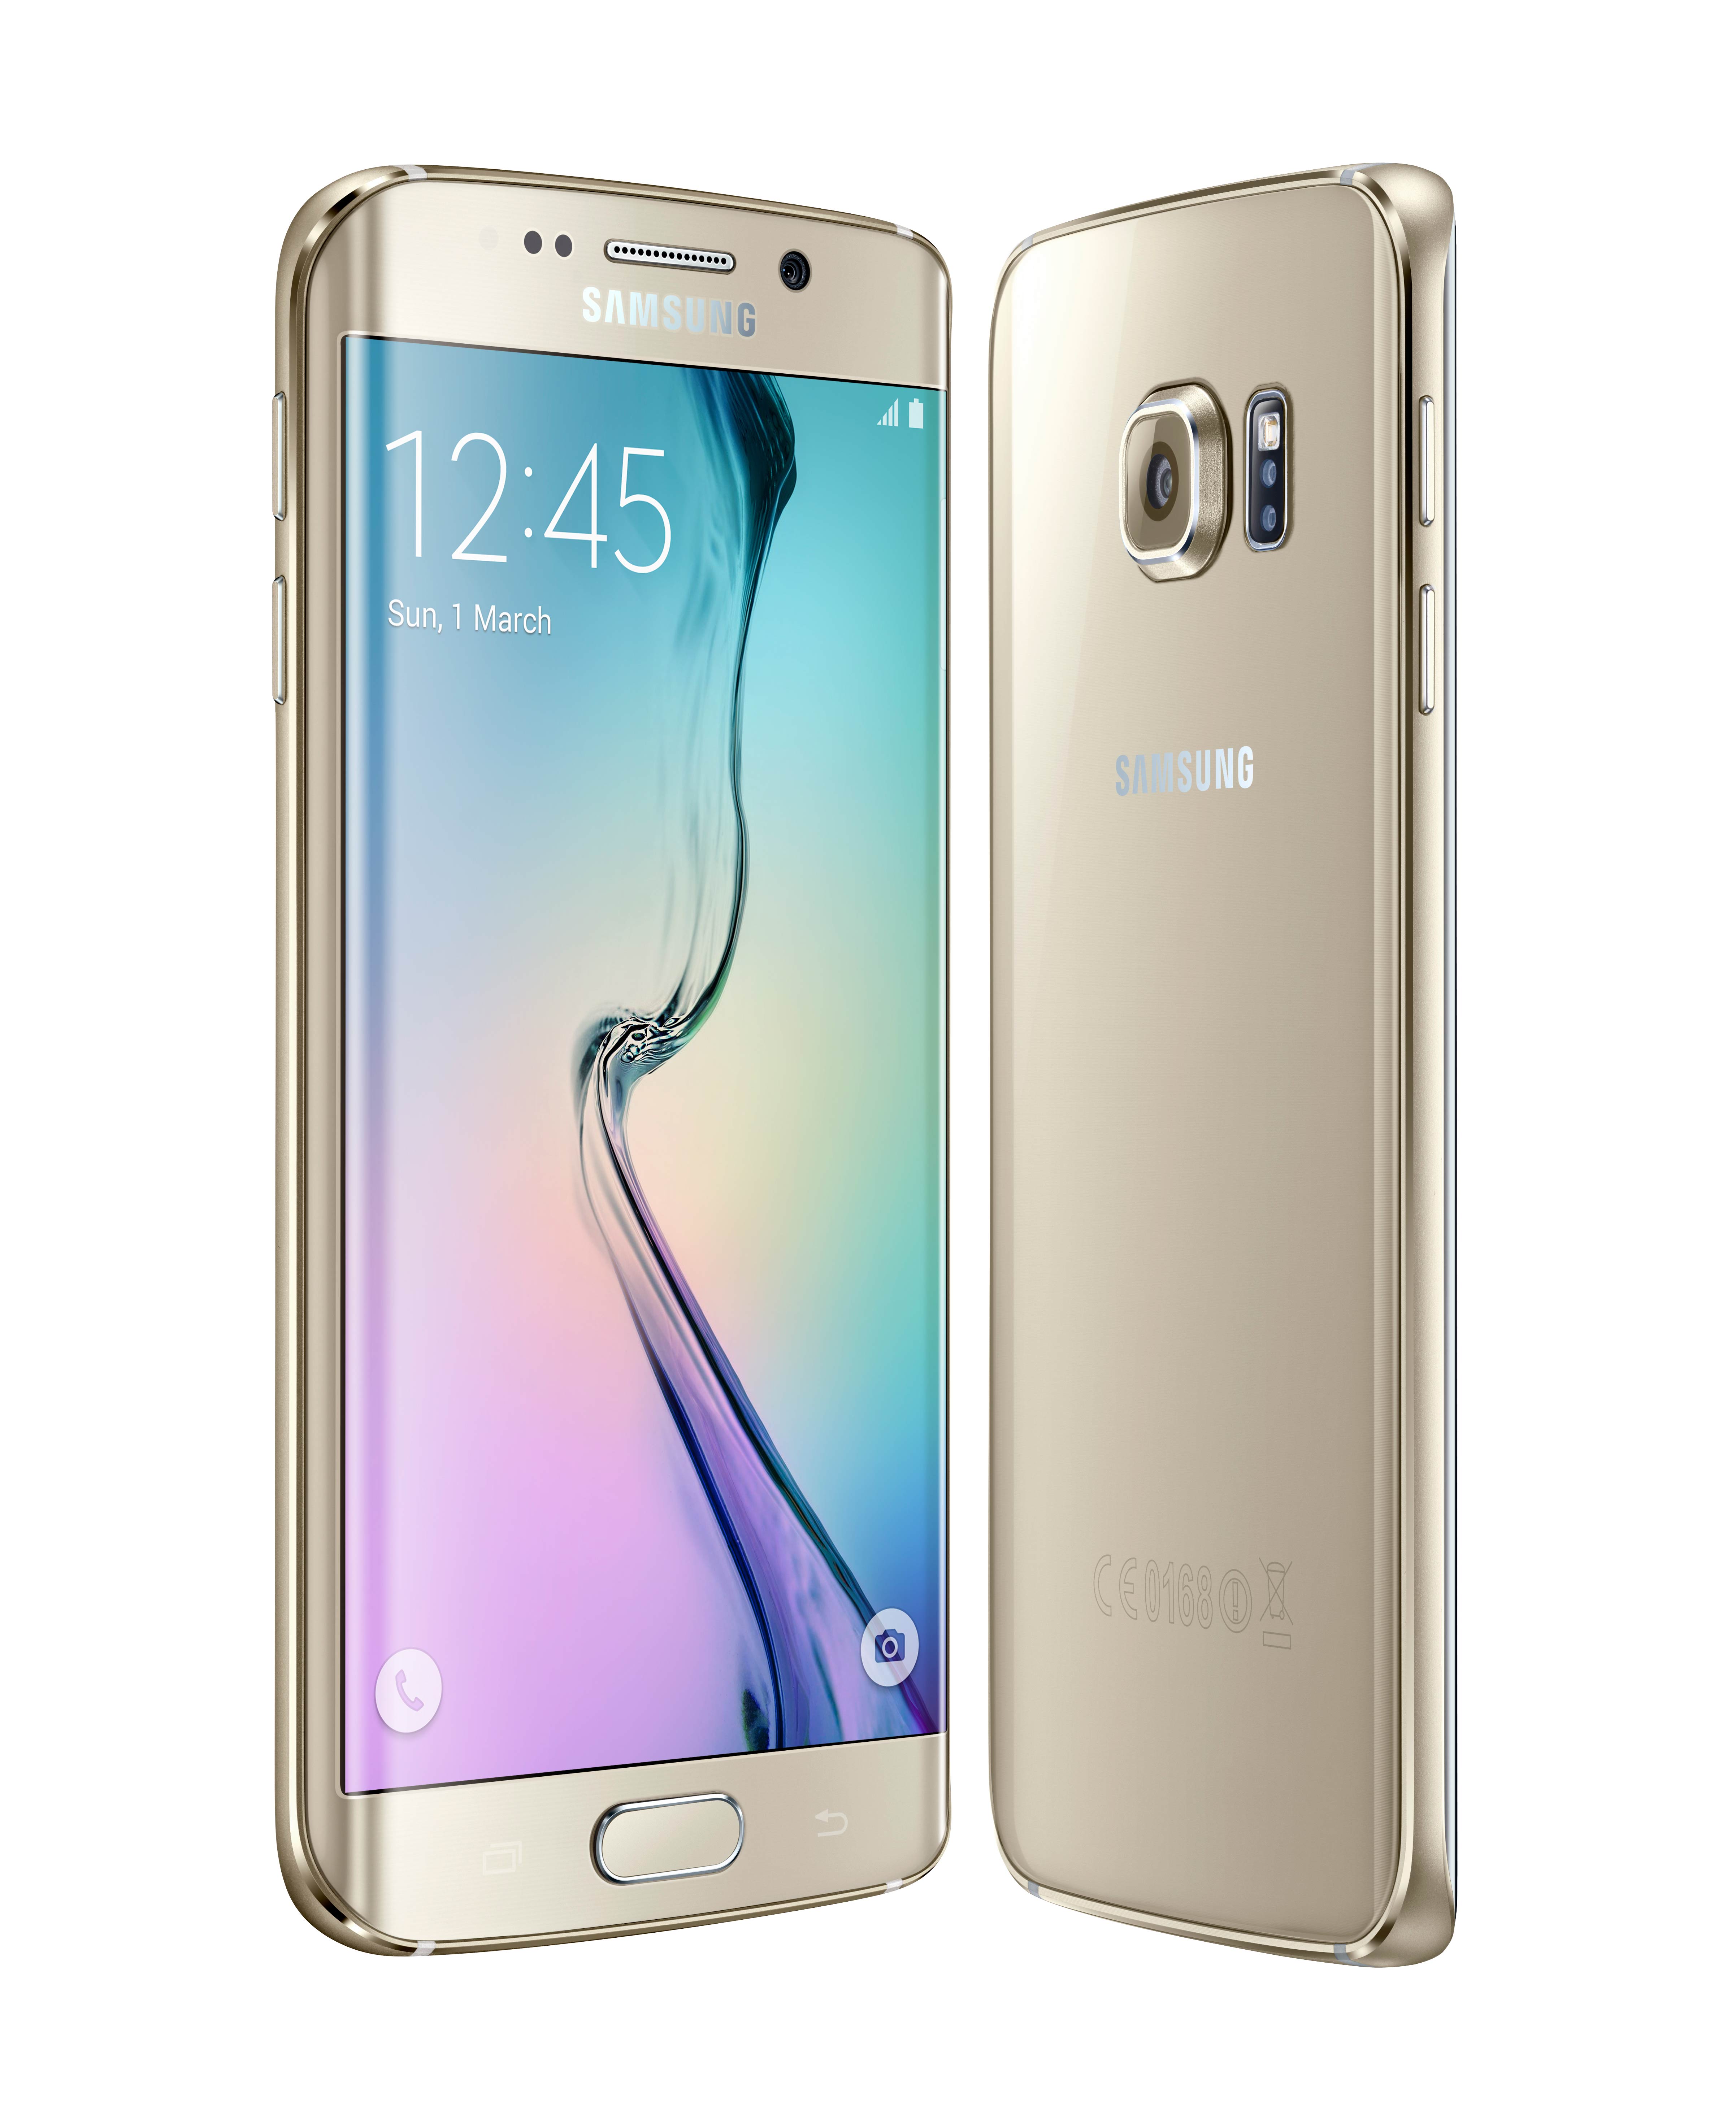 Singtel Samsung Galaxy S6 4G+ And Galaxy S6 edge 4G+ Price Plans « Blog |  lesterchan.net